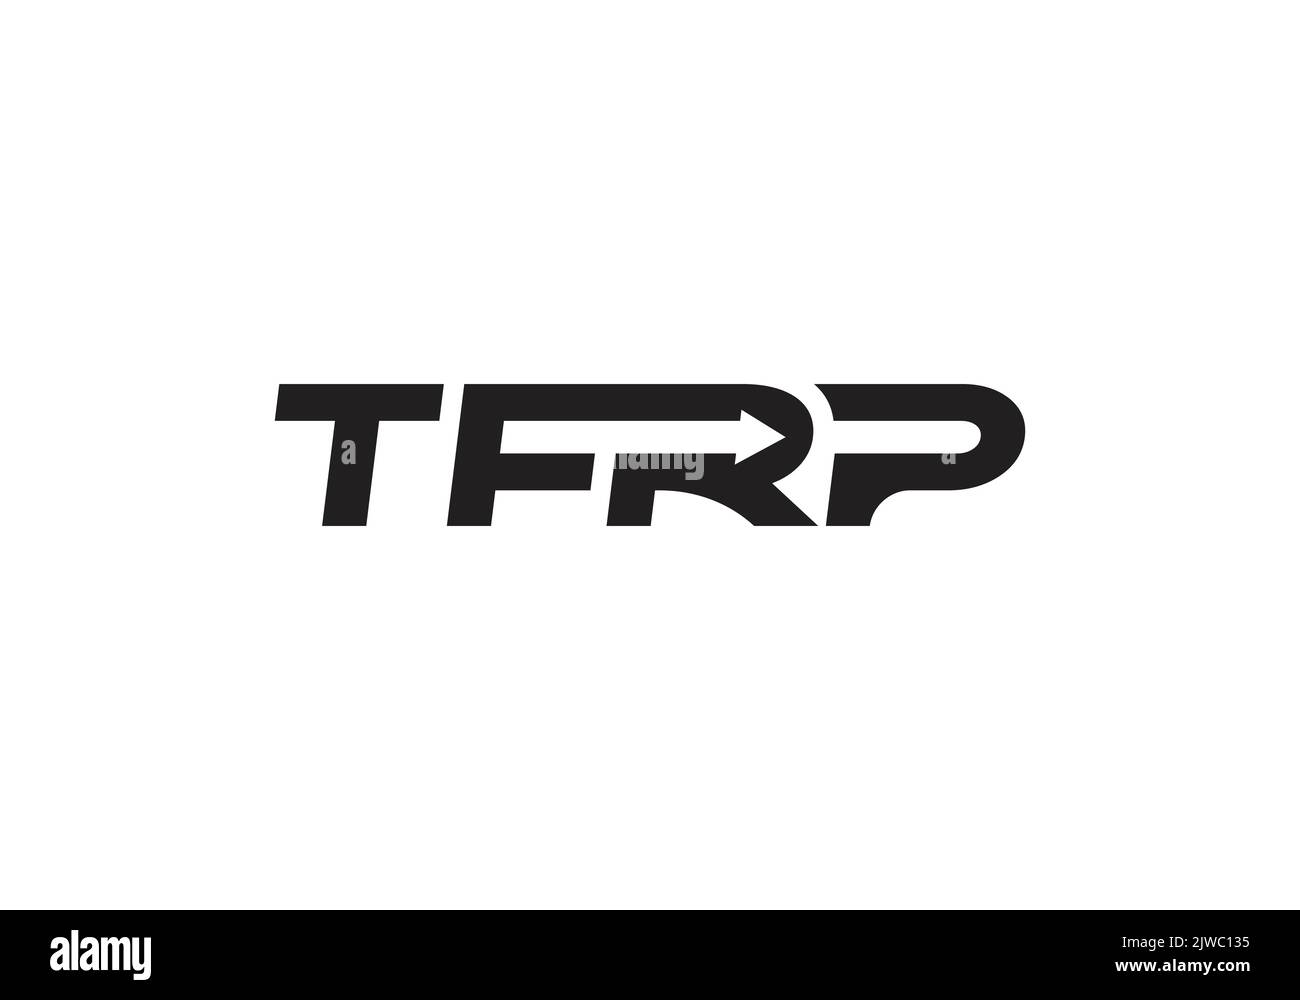 TFRP Rechtspfeil Richtung Initialen Buchstabe tfrp Logo Design Vektor Vorlage t f r p Letter Logo Design Stock Vektor